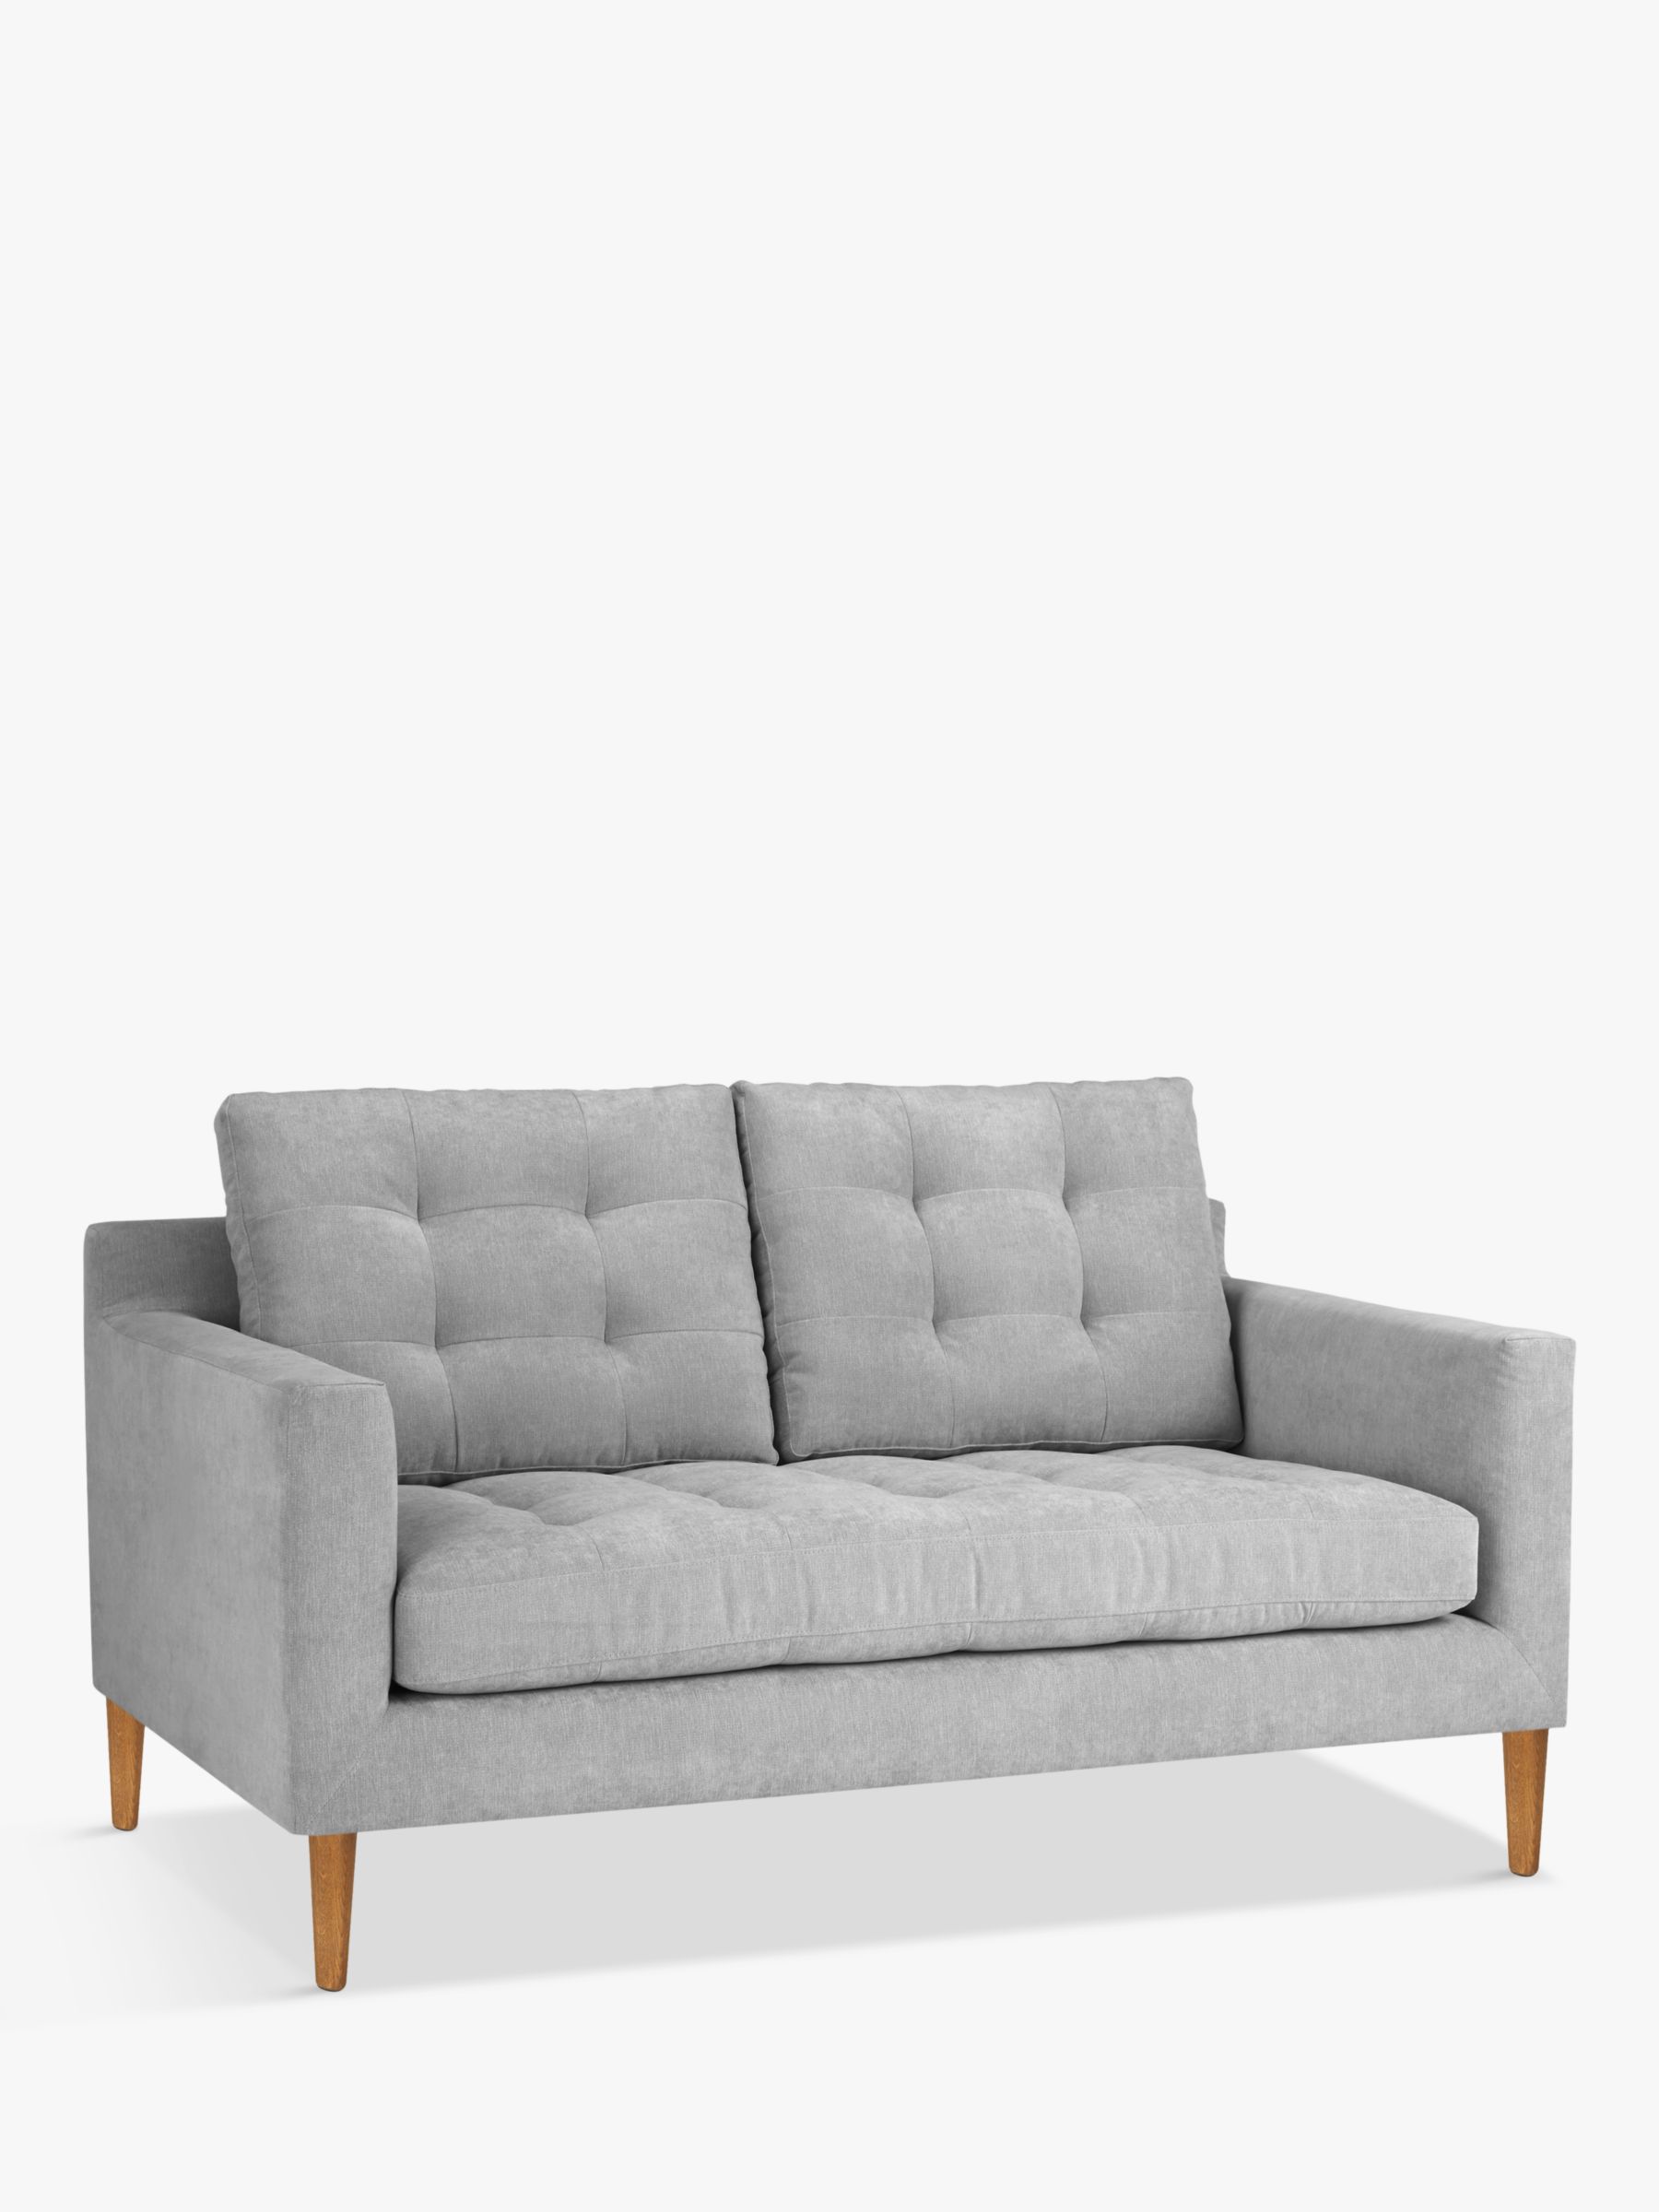 Photo of John lewis draper medium 2 seater sofa